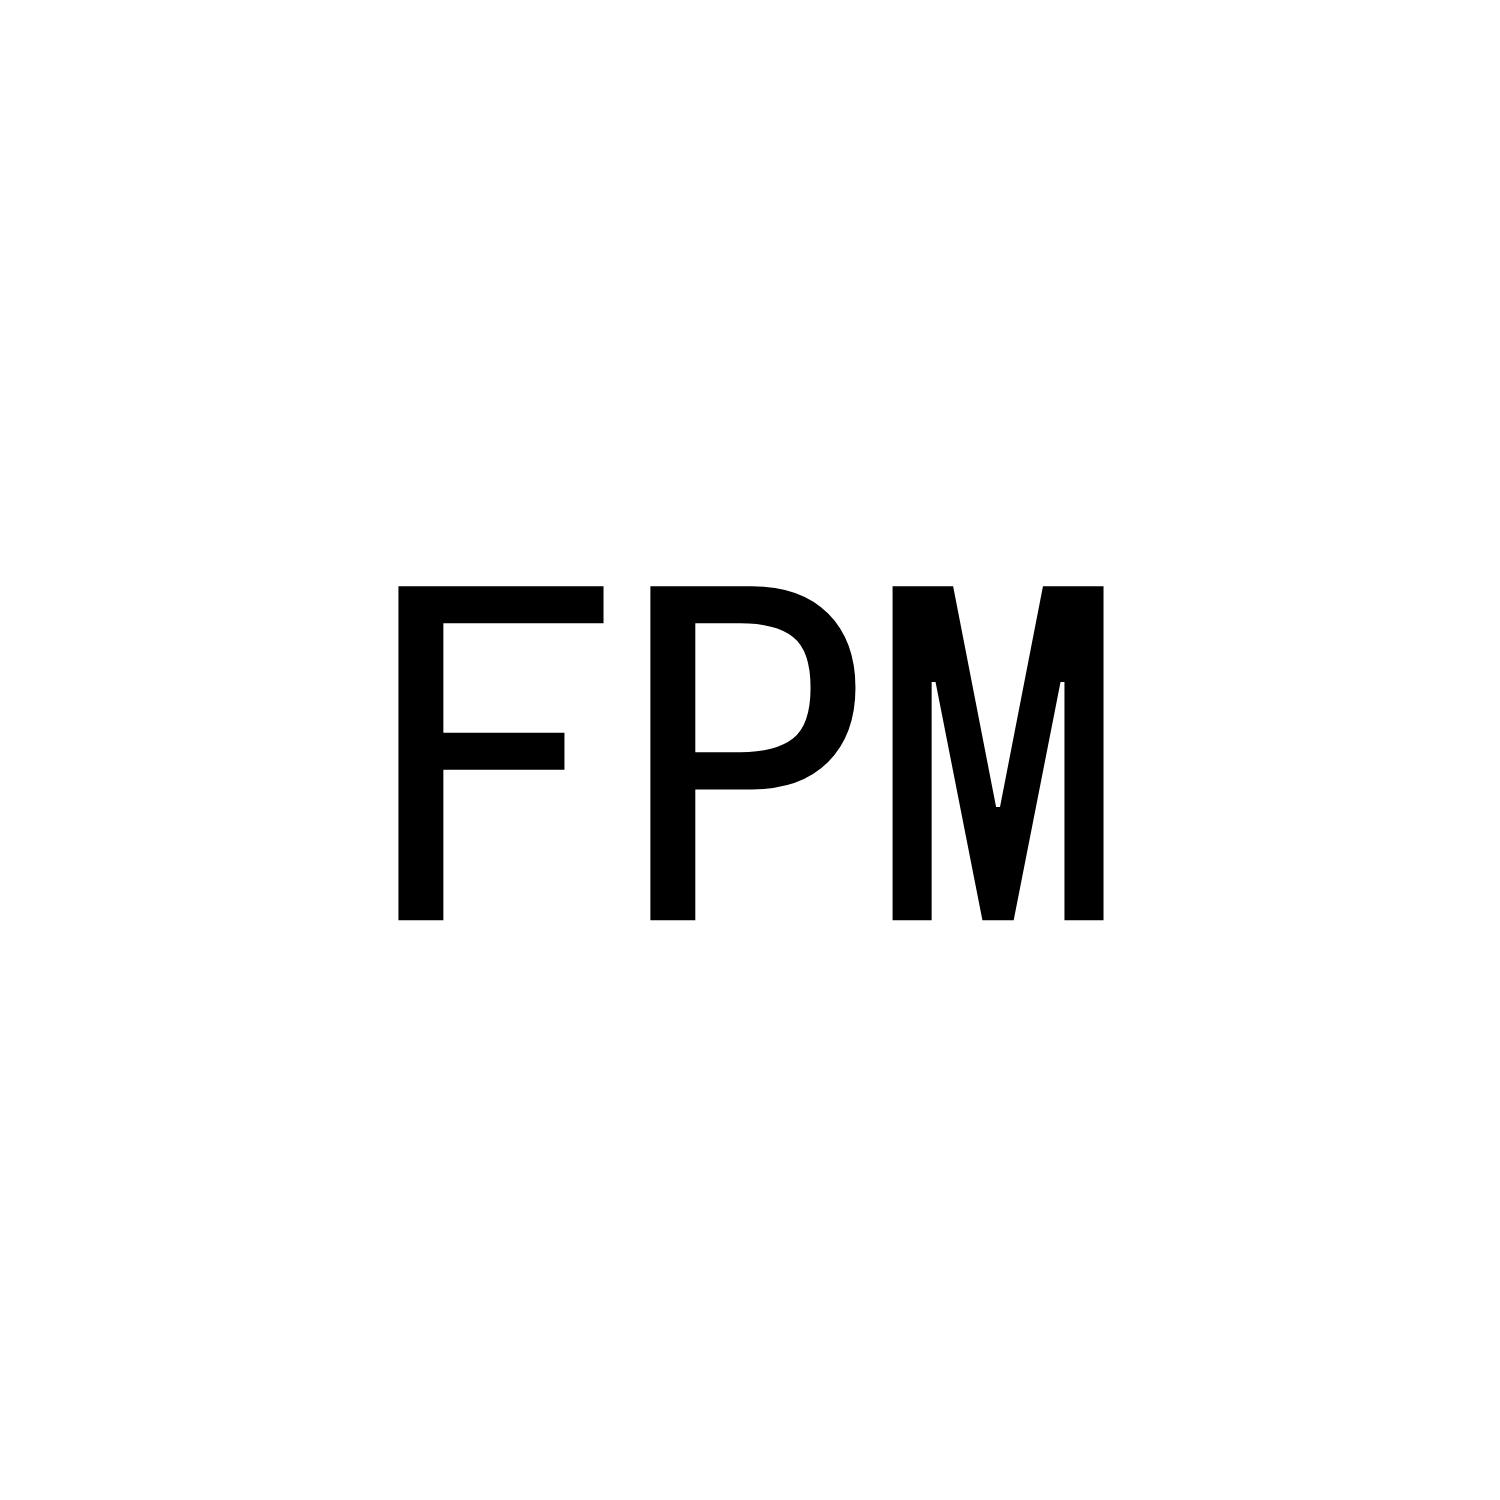 FPM